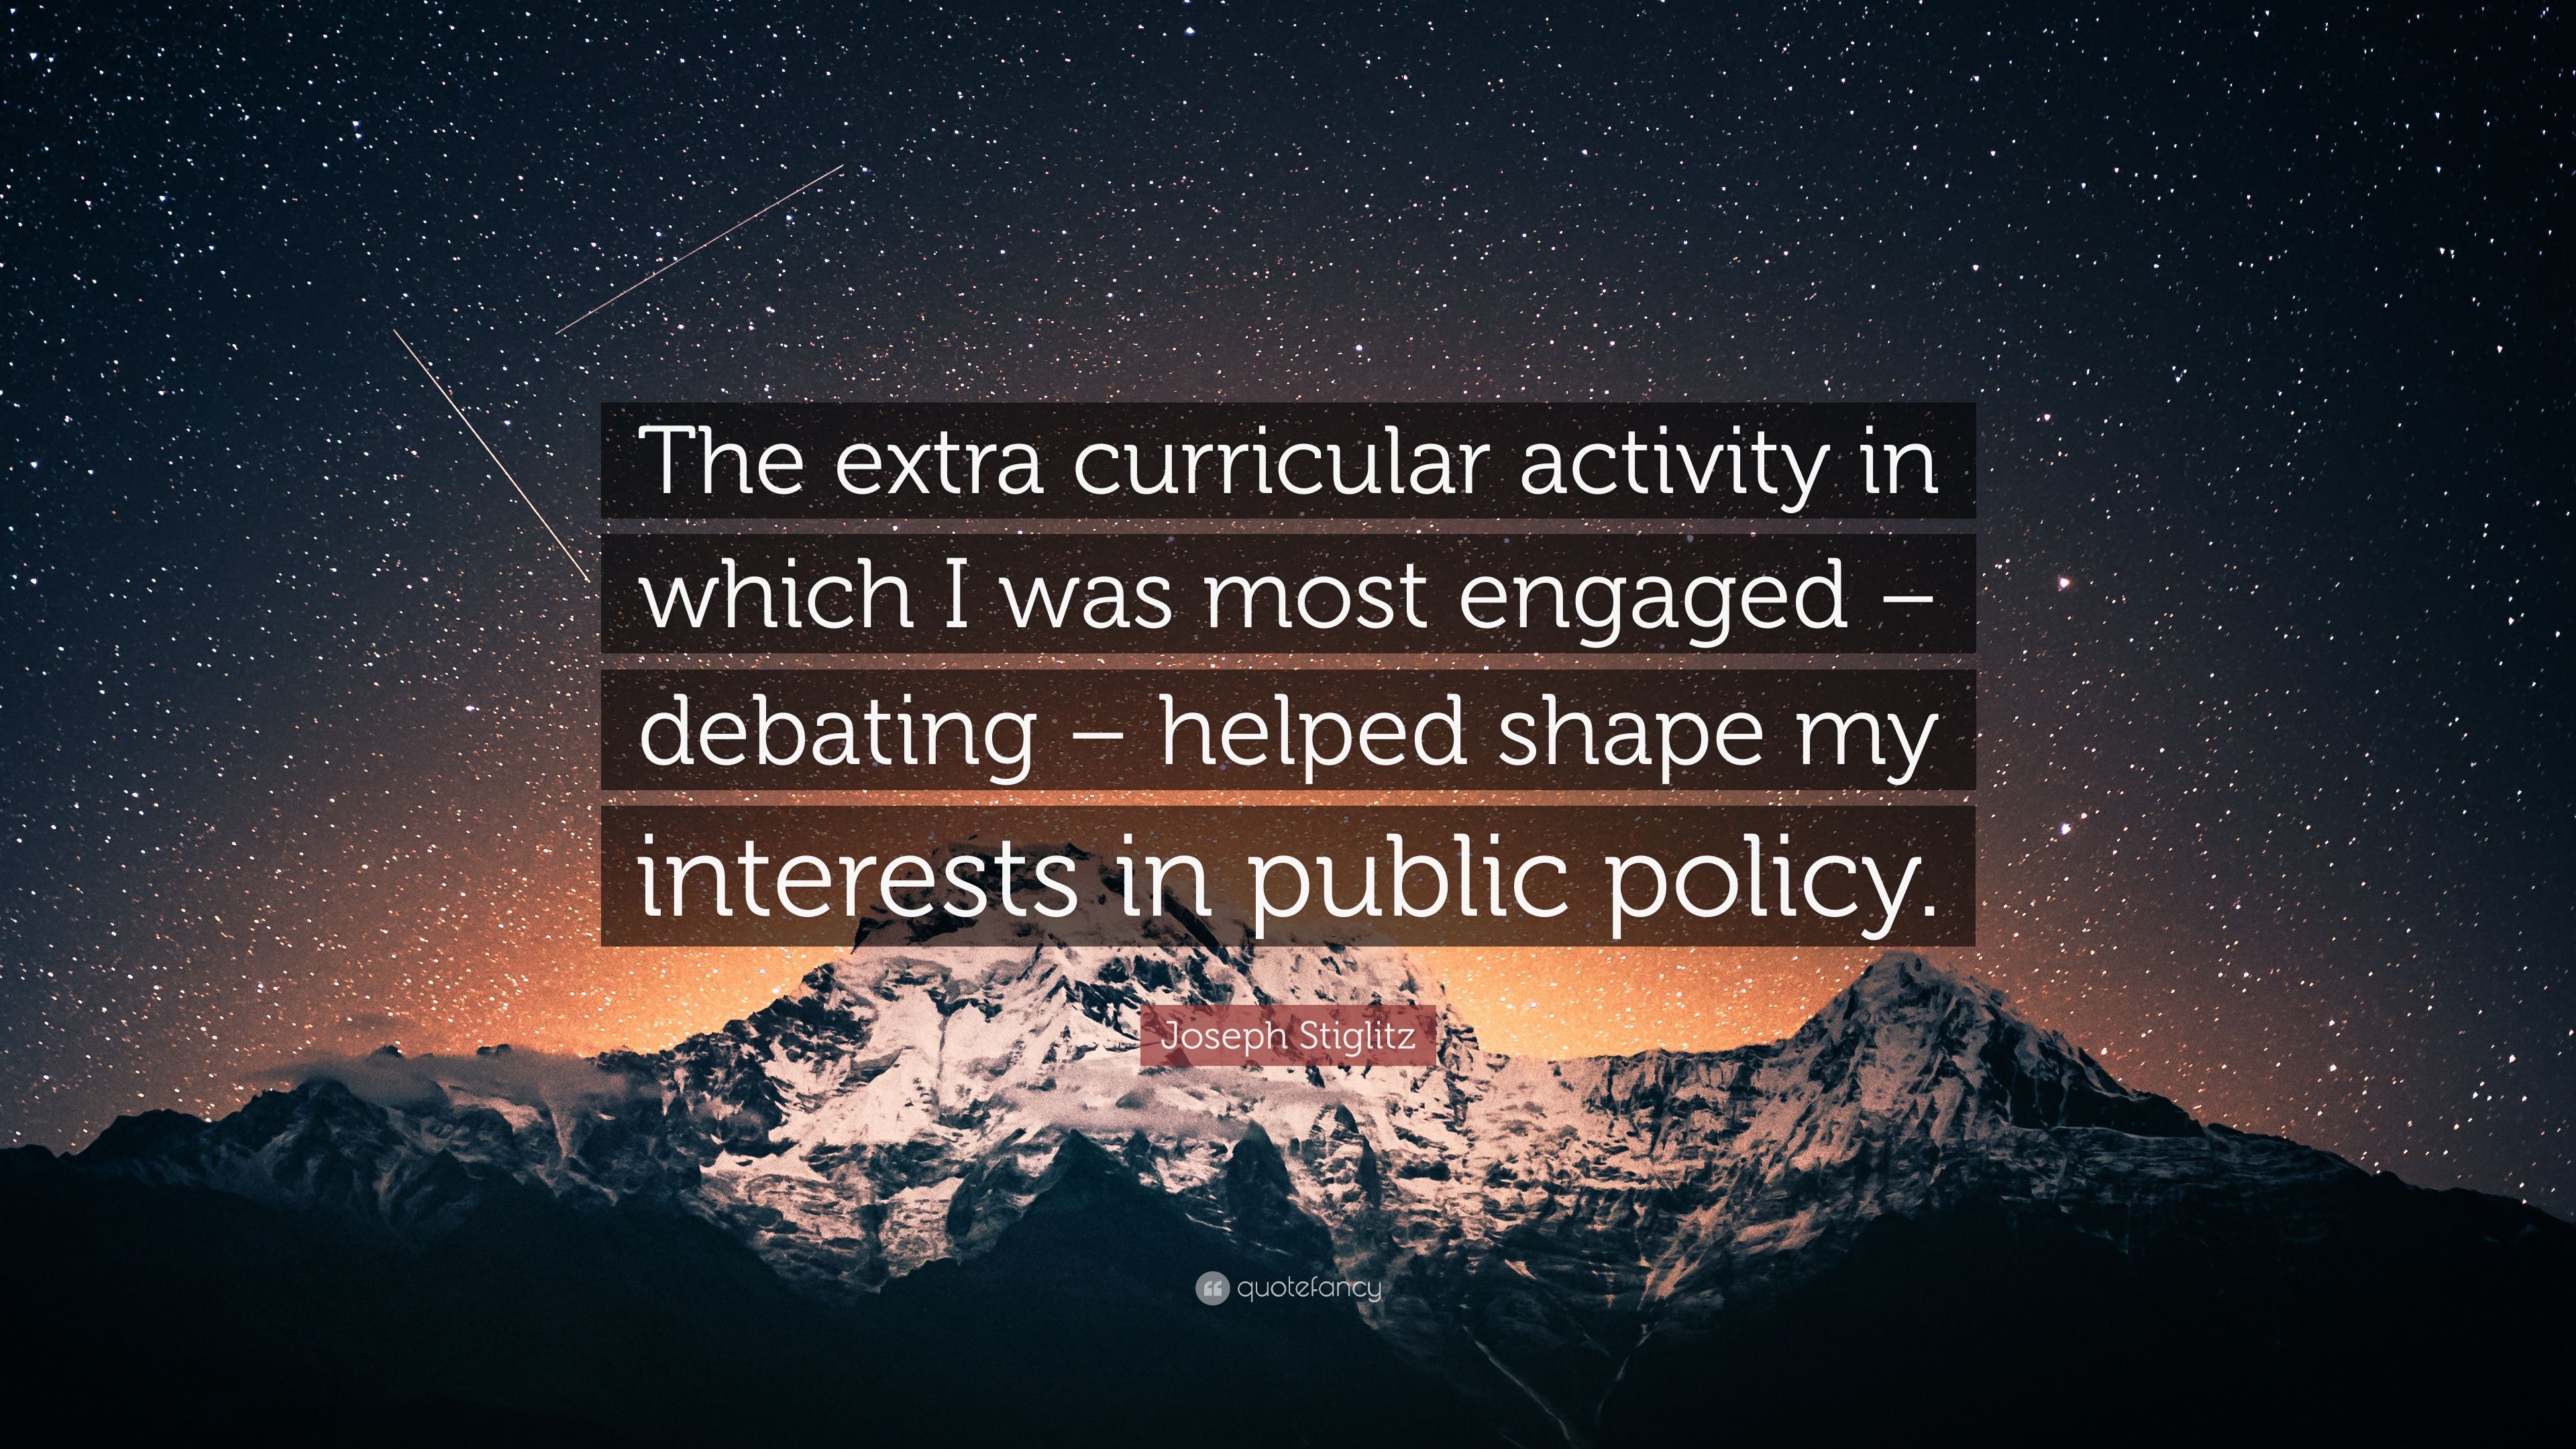 Joseph Stiglitz Quote: “The extra curricular activity in which I